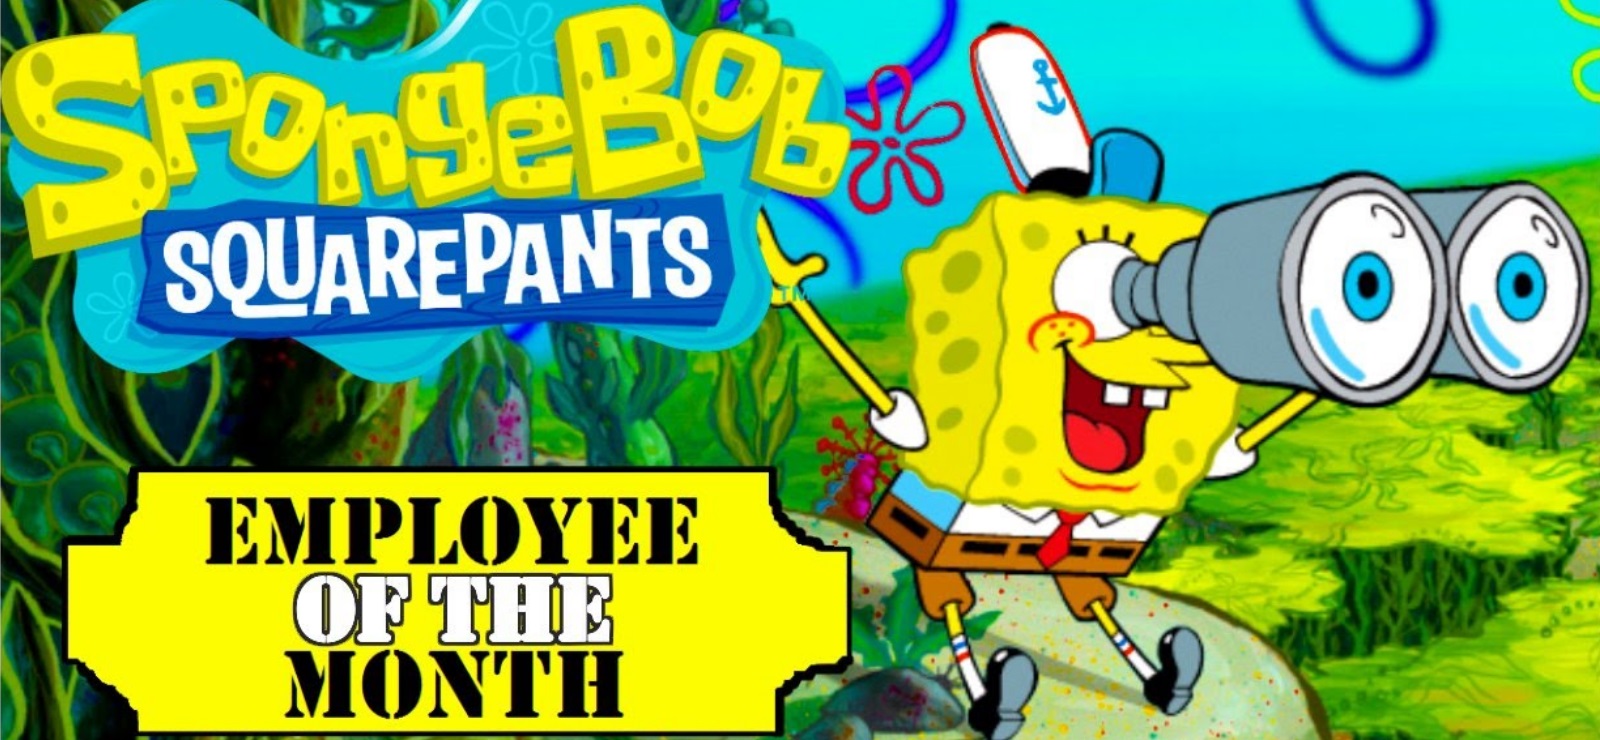 spongebob squarepants employee of the month mac